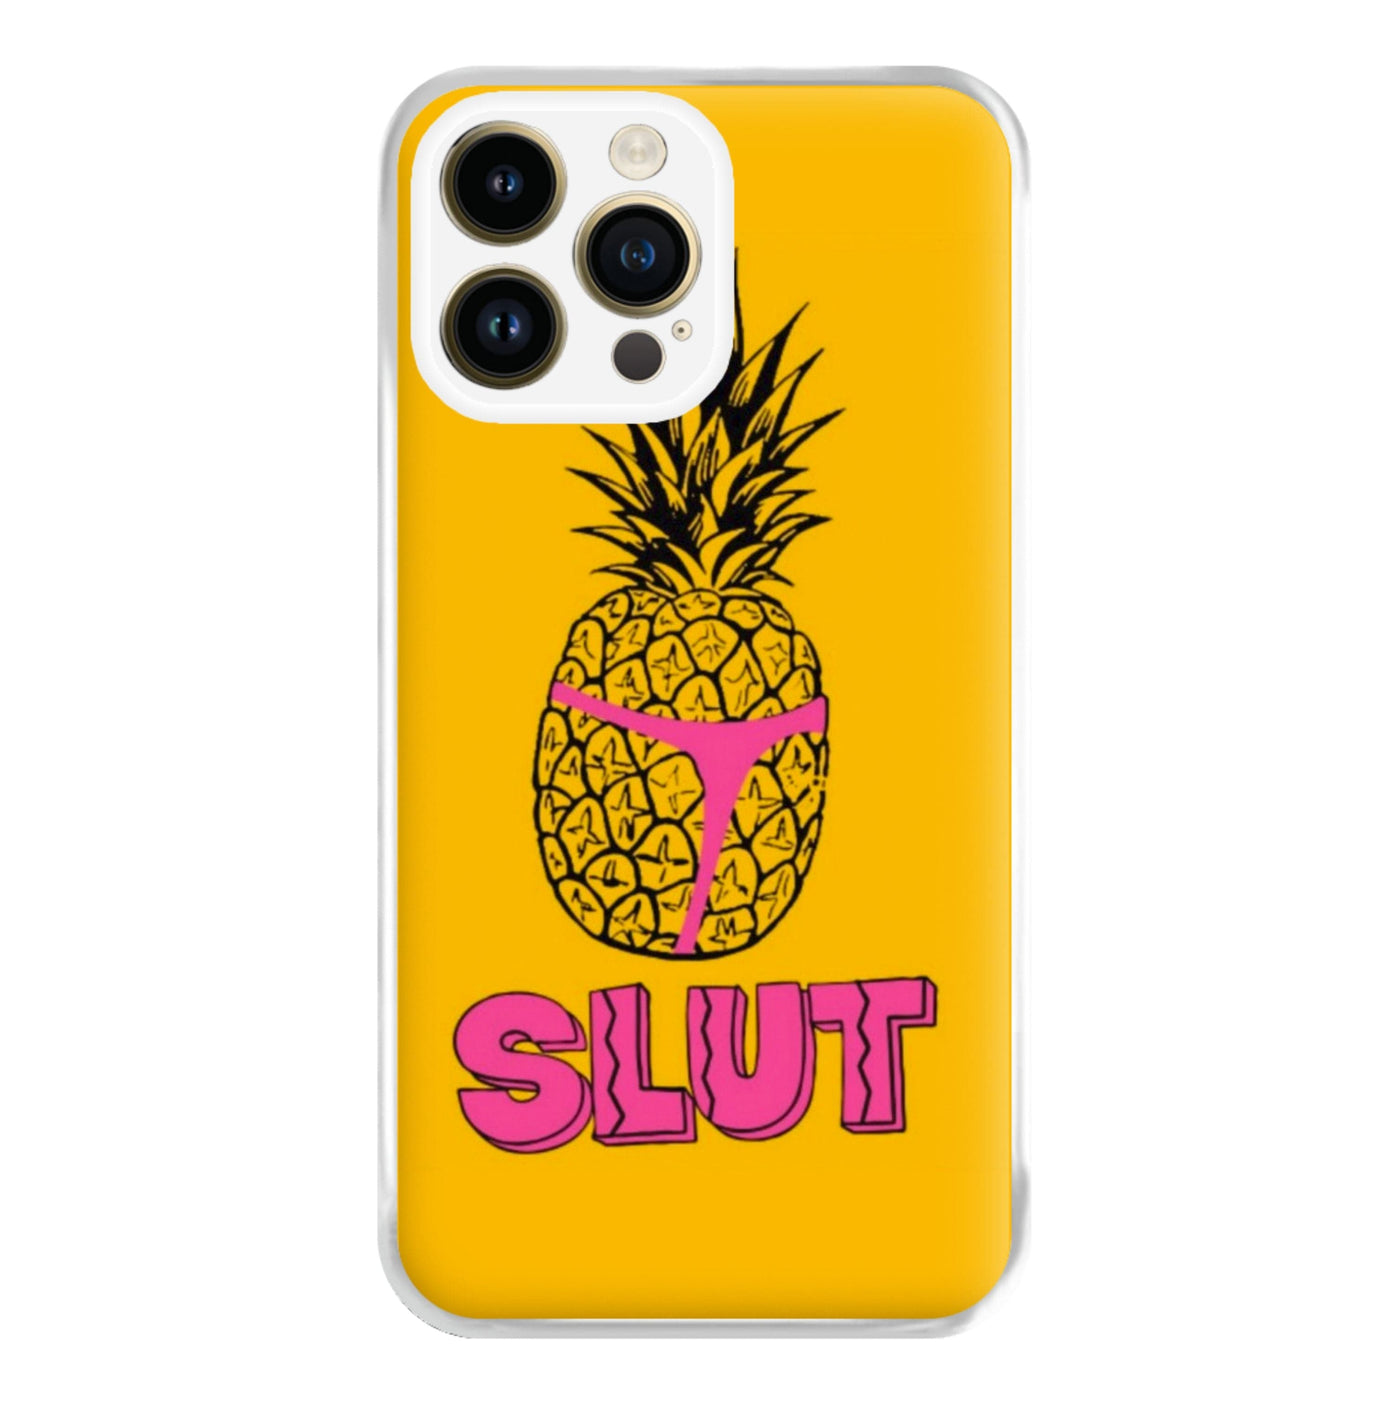 Holt's Pineapple Shirt Design - Brooklyn Nine-Nine Phone Case